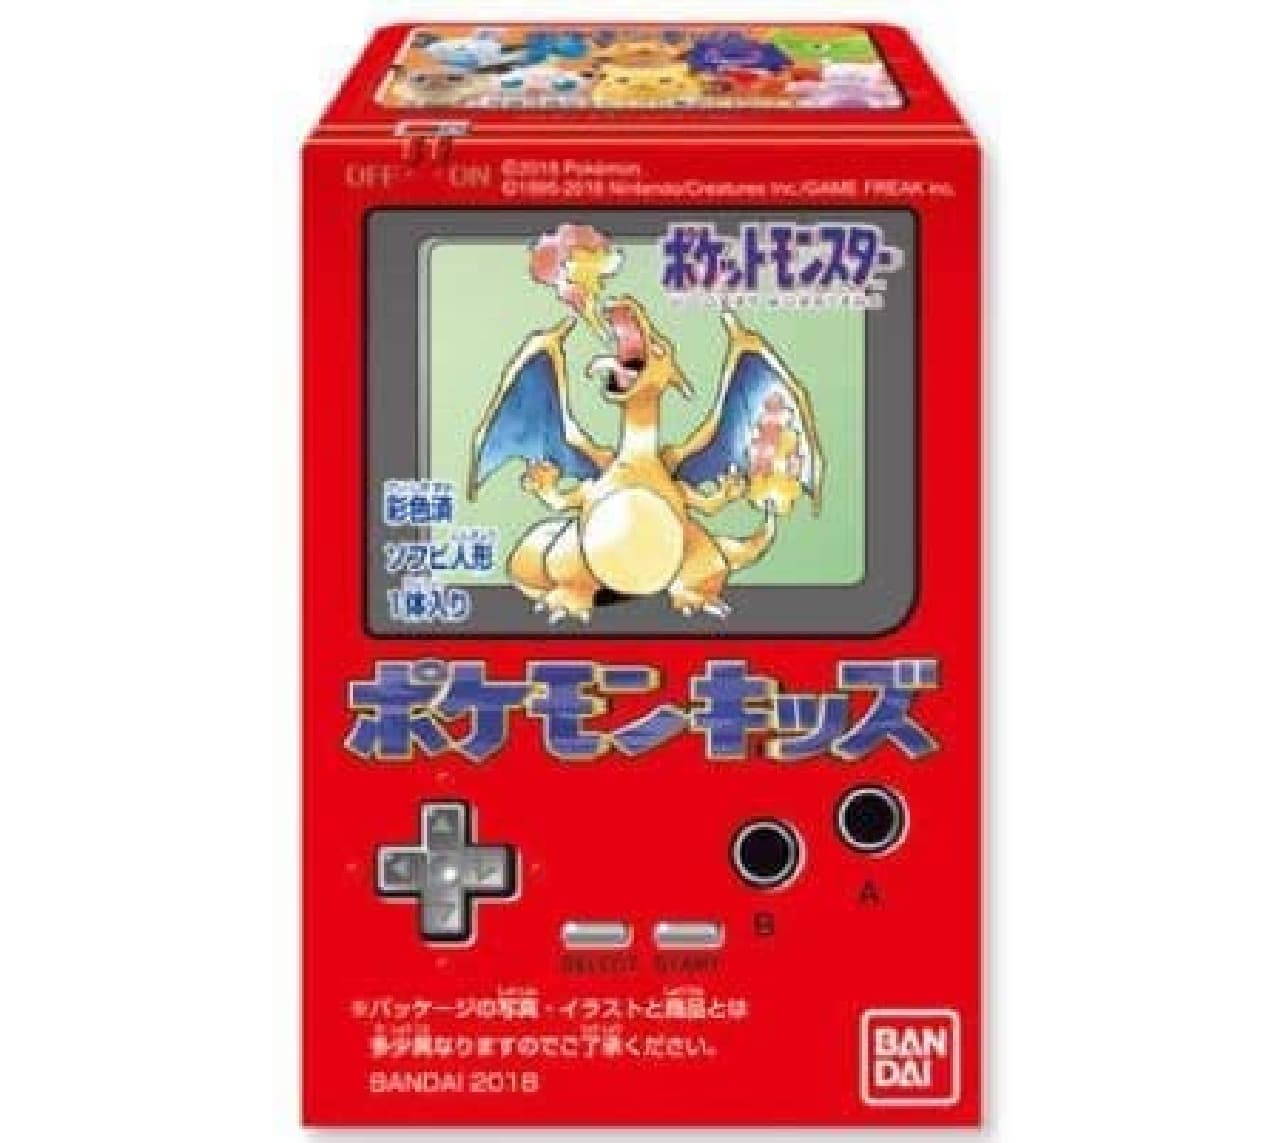 Bandai Candy Division "Pokemon Kids (first reprint)"